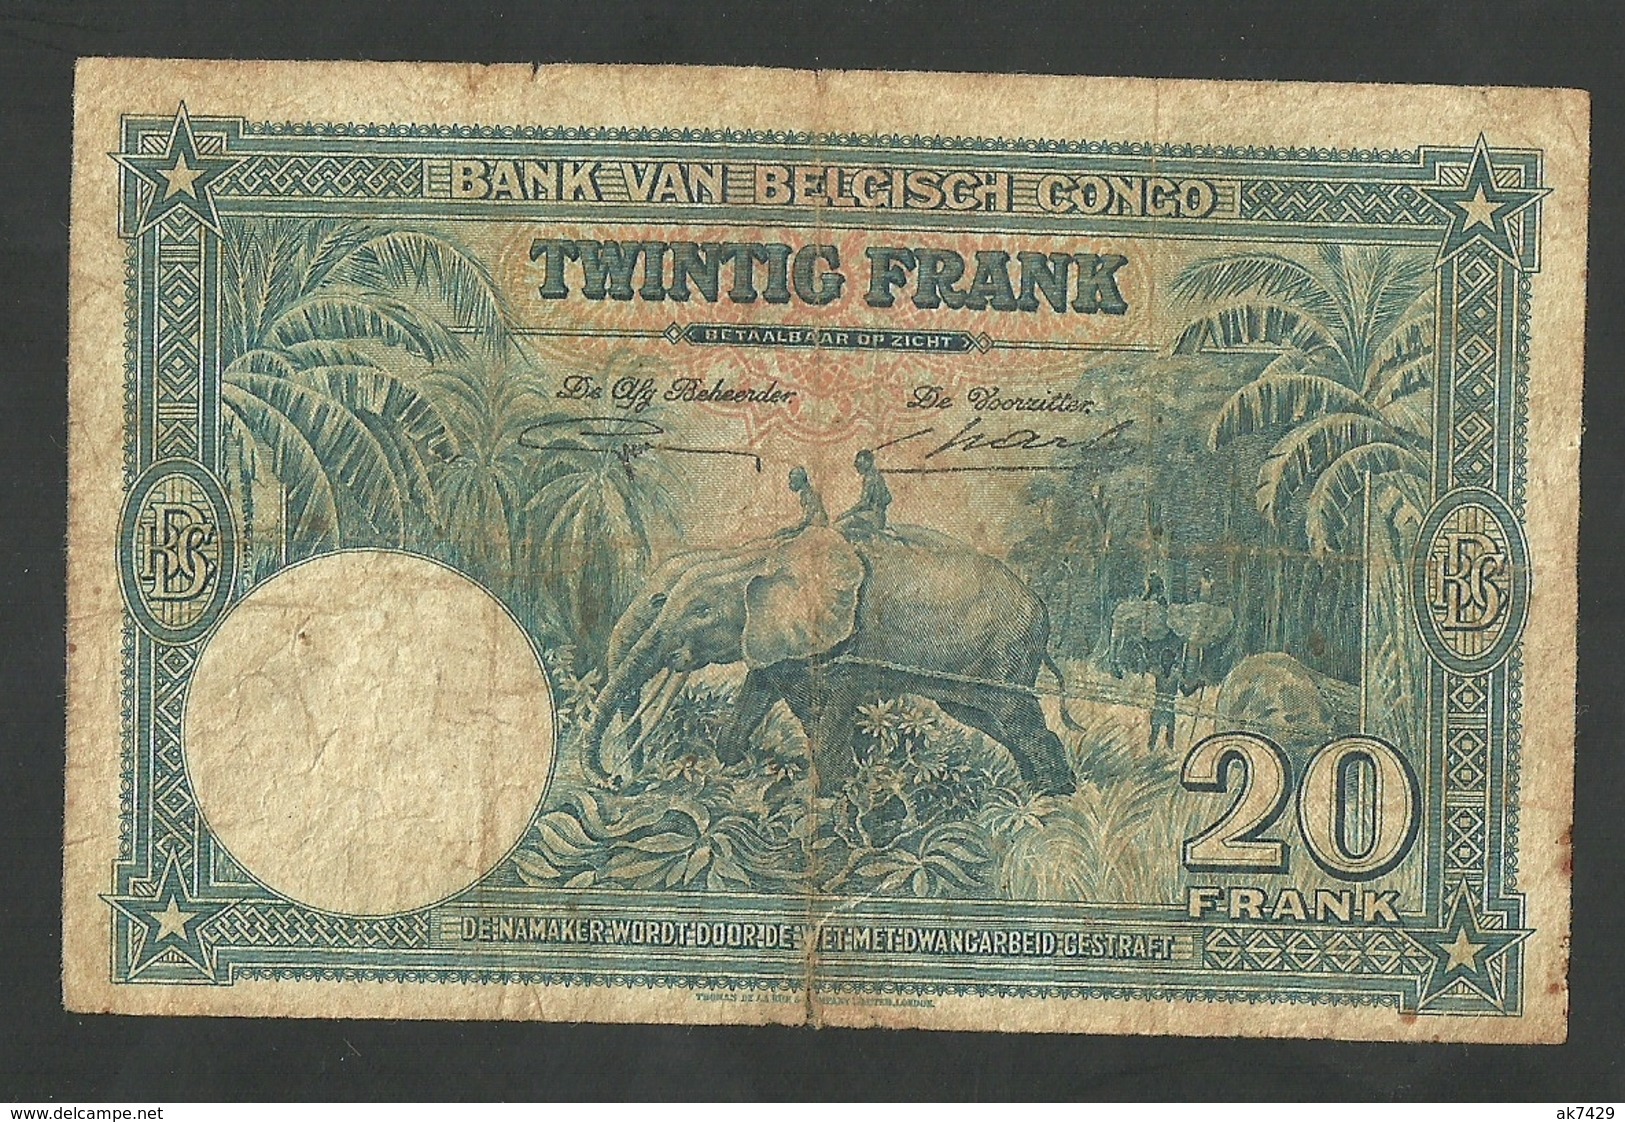 BELGIAN CONGO 20 FRANCS 1946 PICK # 15E CIRCULATED FINE  BANKNOTE RARE - Bank Van Belgisch Kongo